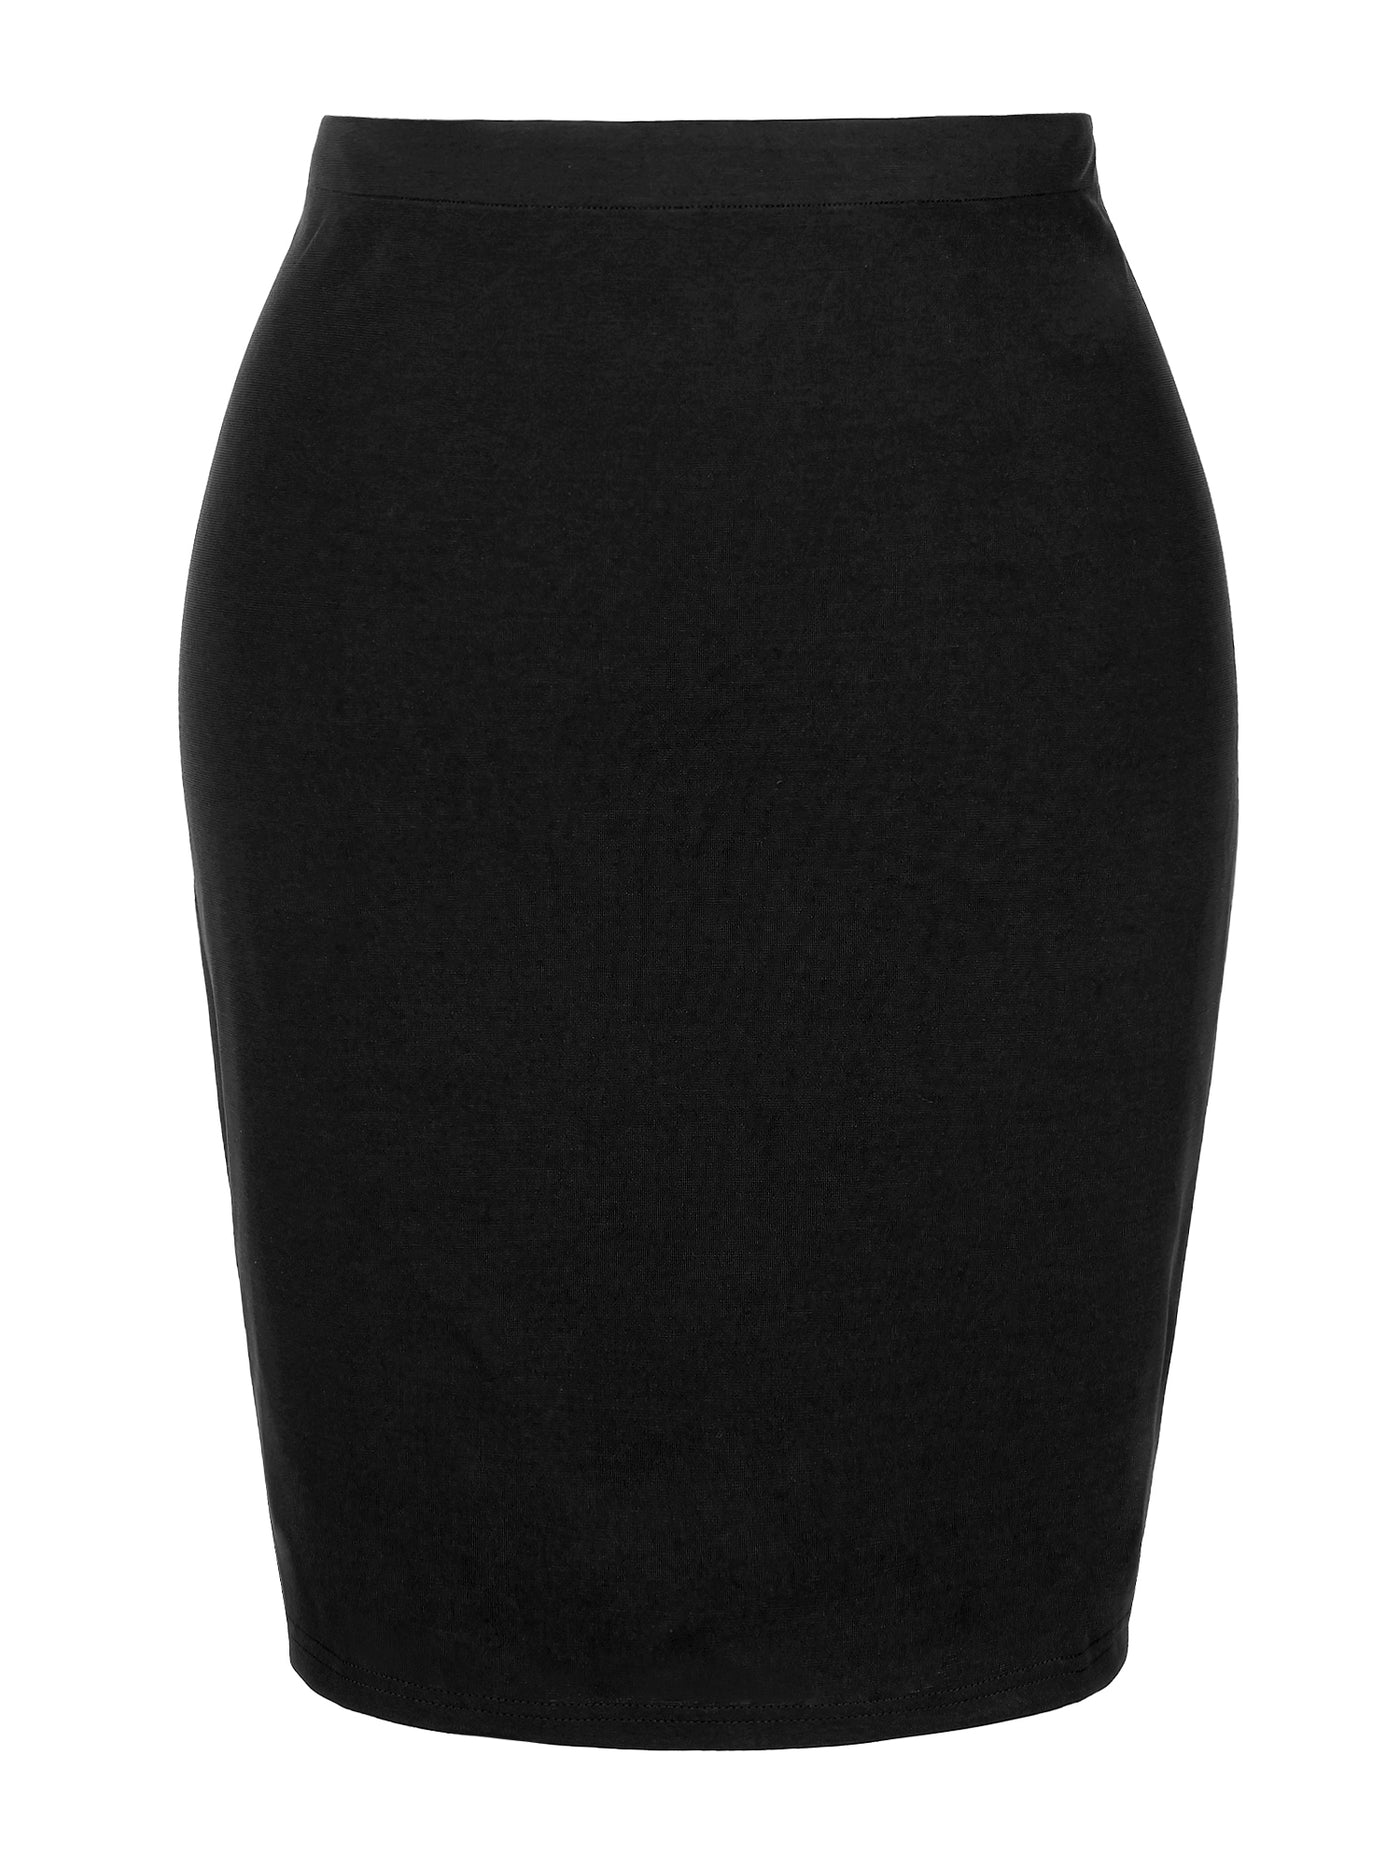 Bublédon Plus Size for Women High Waist Stretch Office Work Bodycon Pencil Skirt